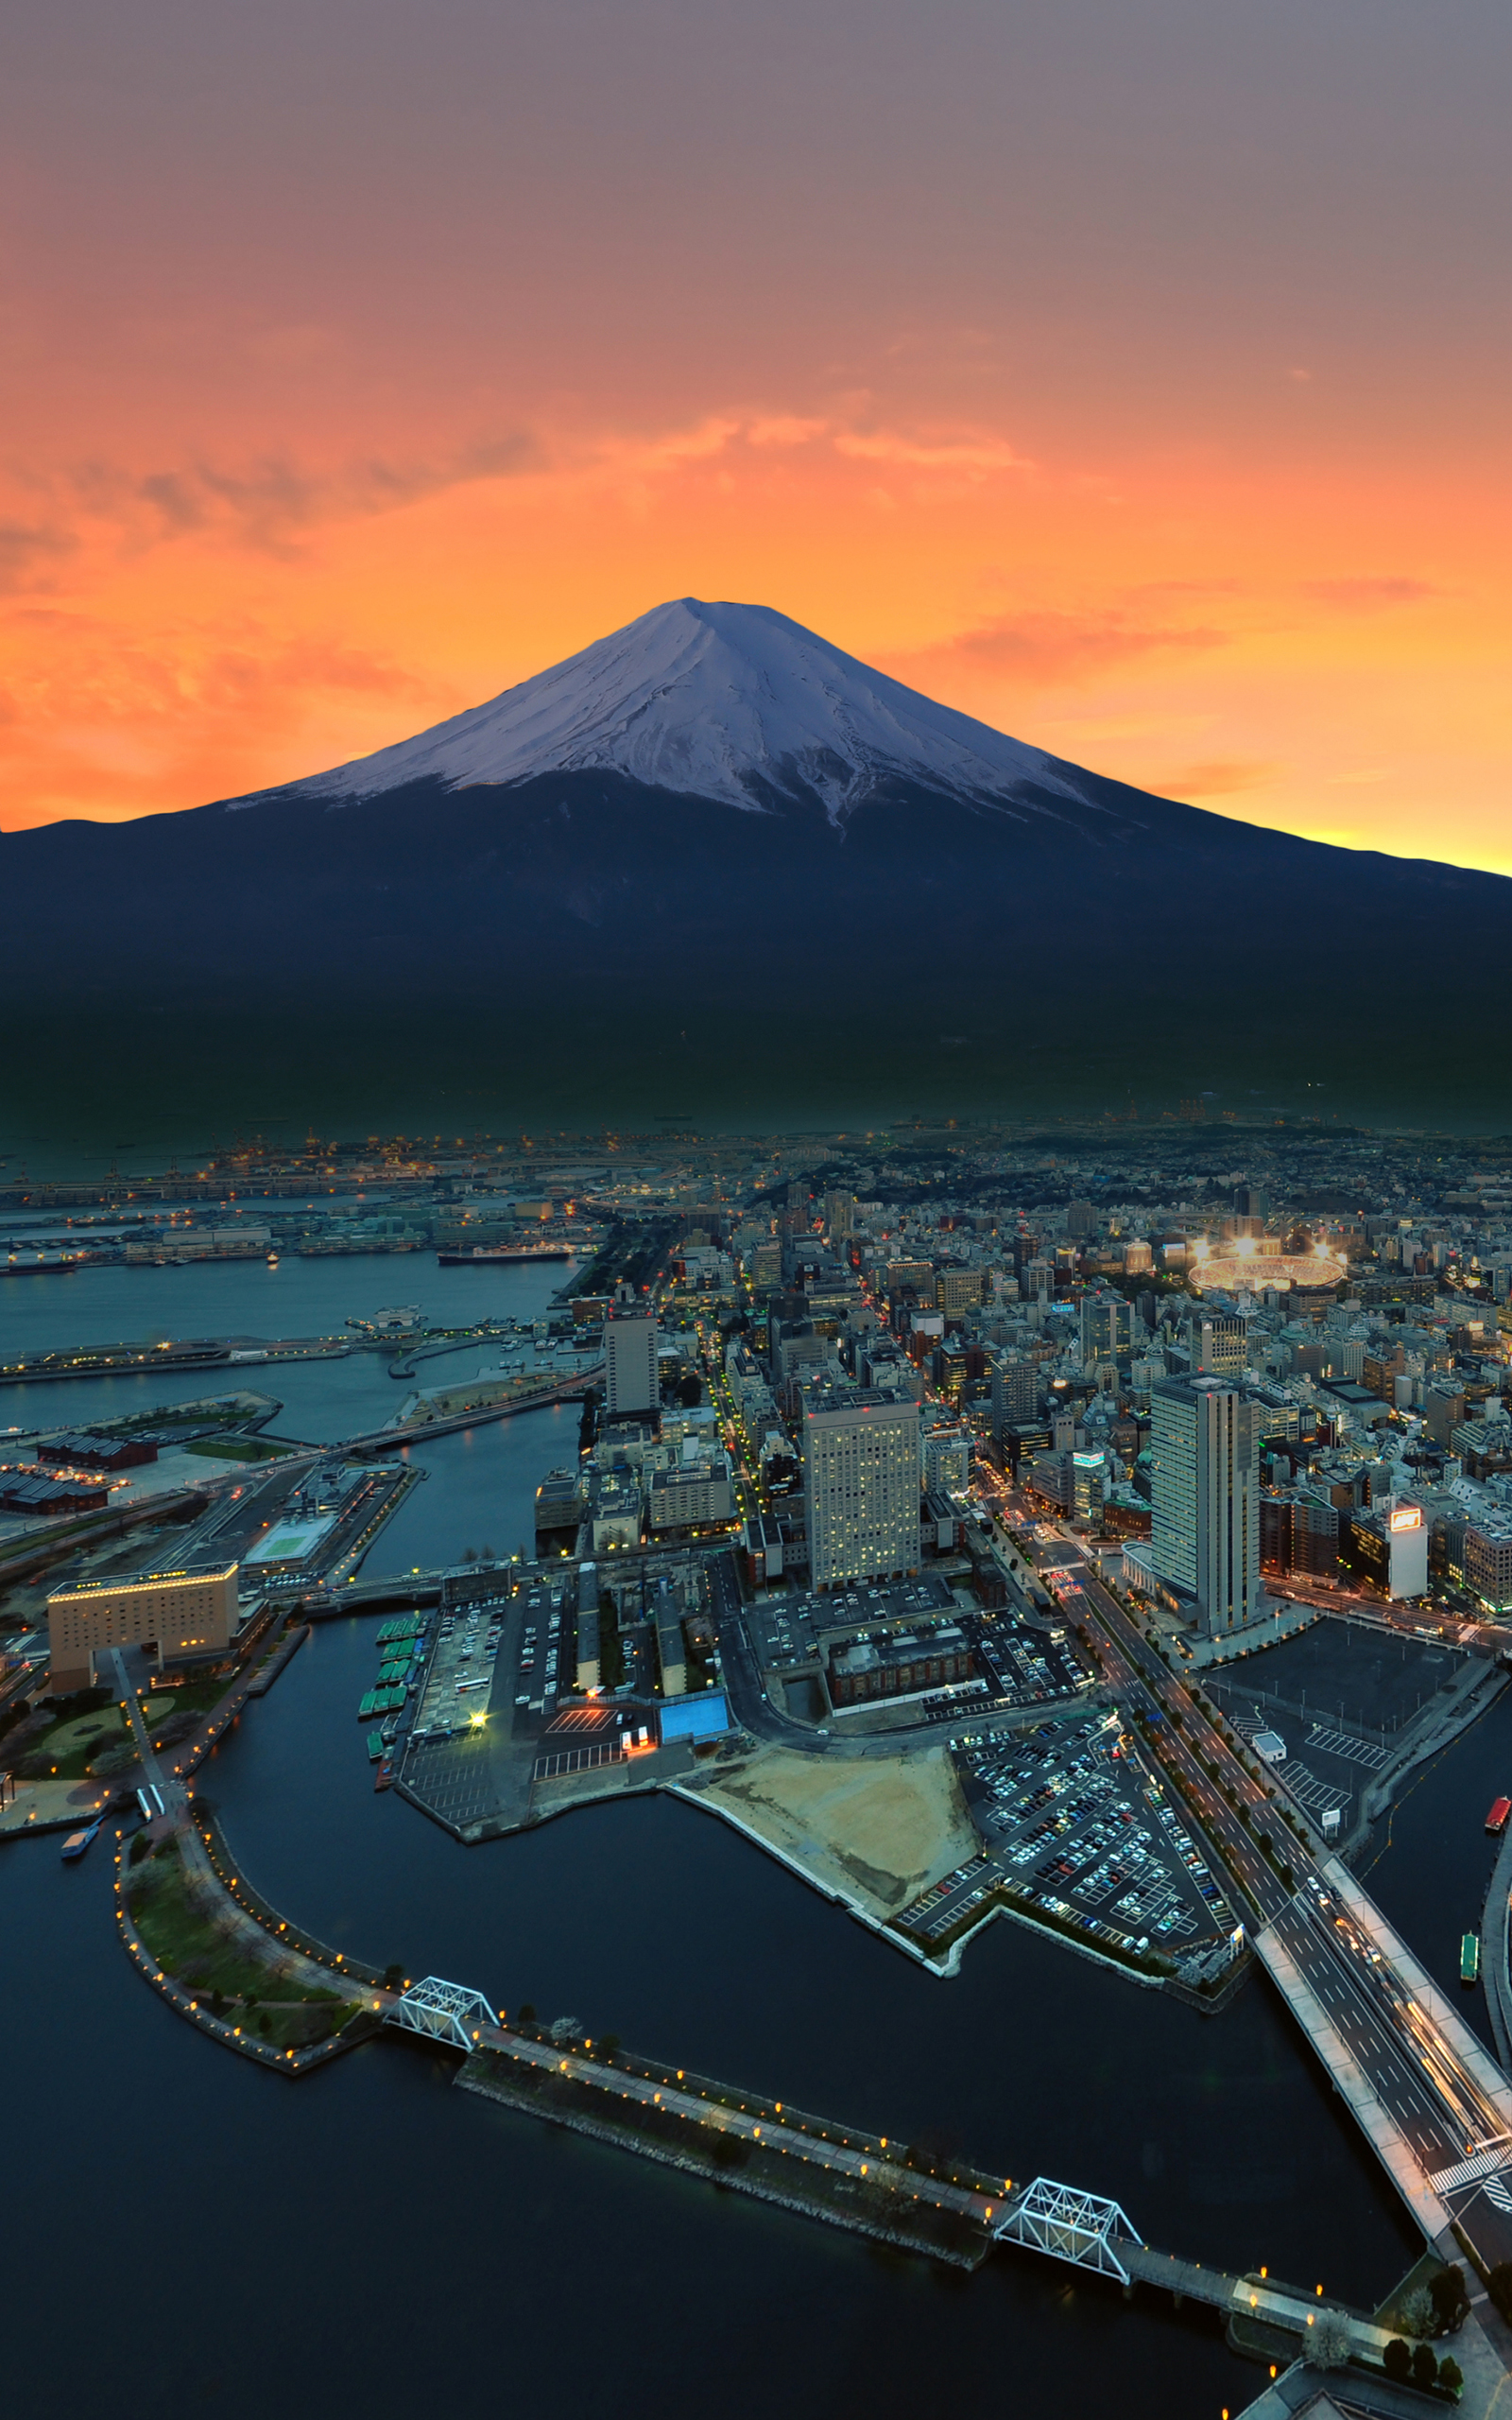 General 1600x2560 Mount Fuji sunset Japan city mountains snowy peak portrait display